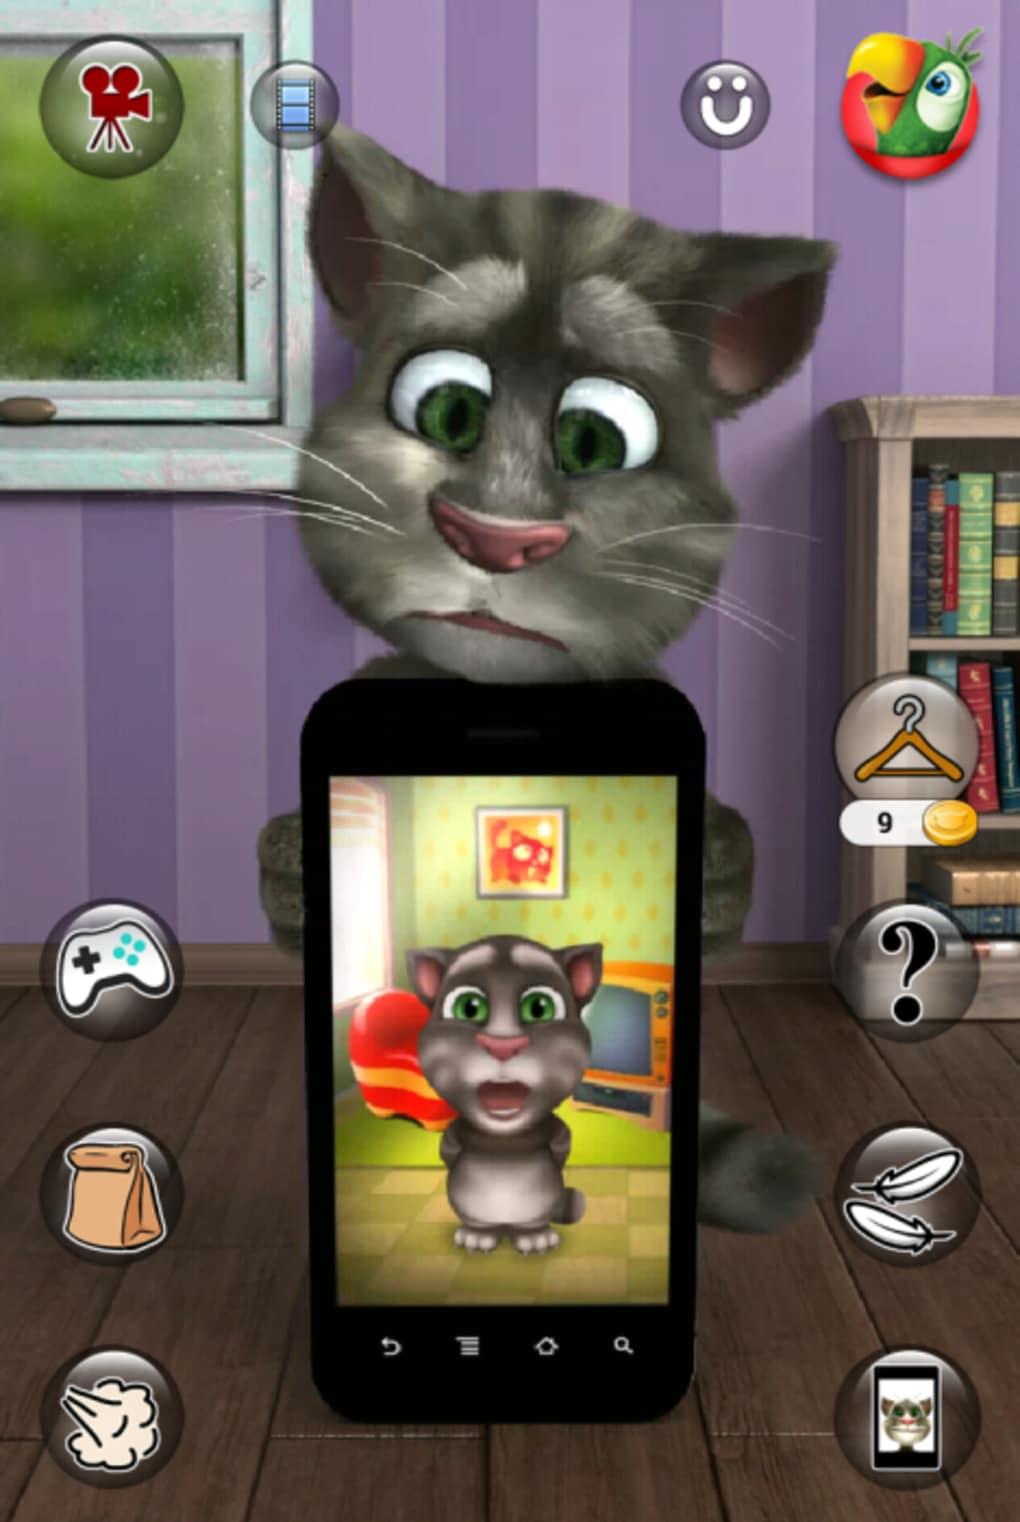 Download Talking Cat Application For Mobile